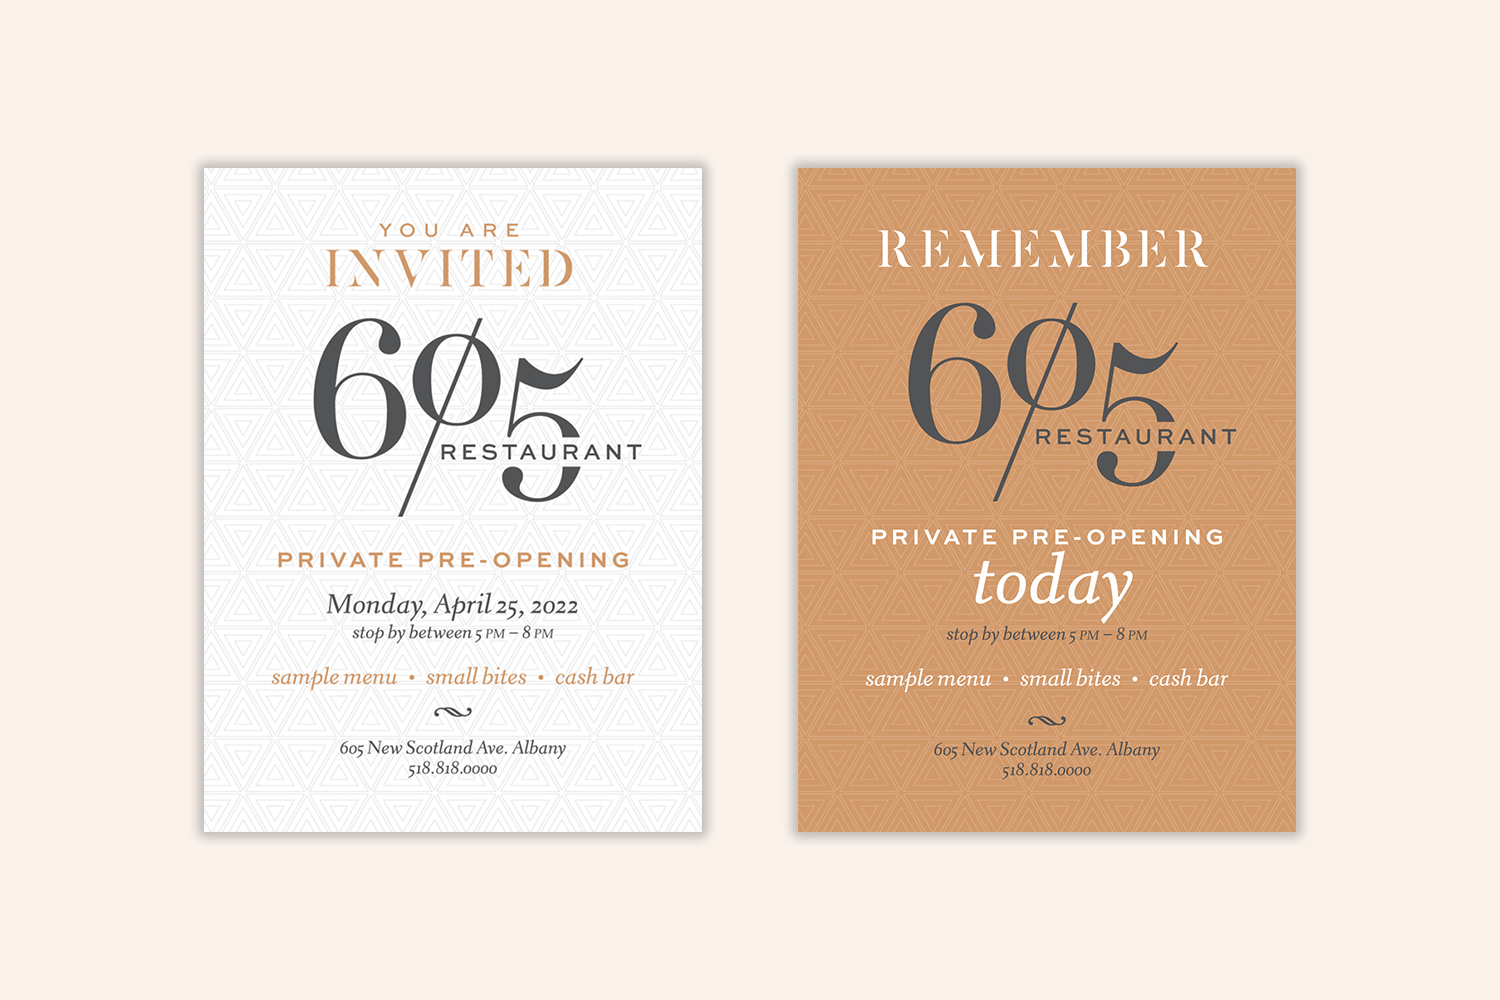 Mockup of opening night invitations for Restaurant 605